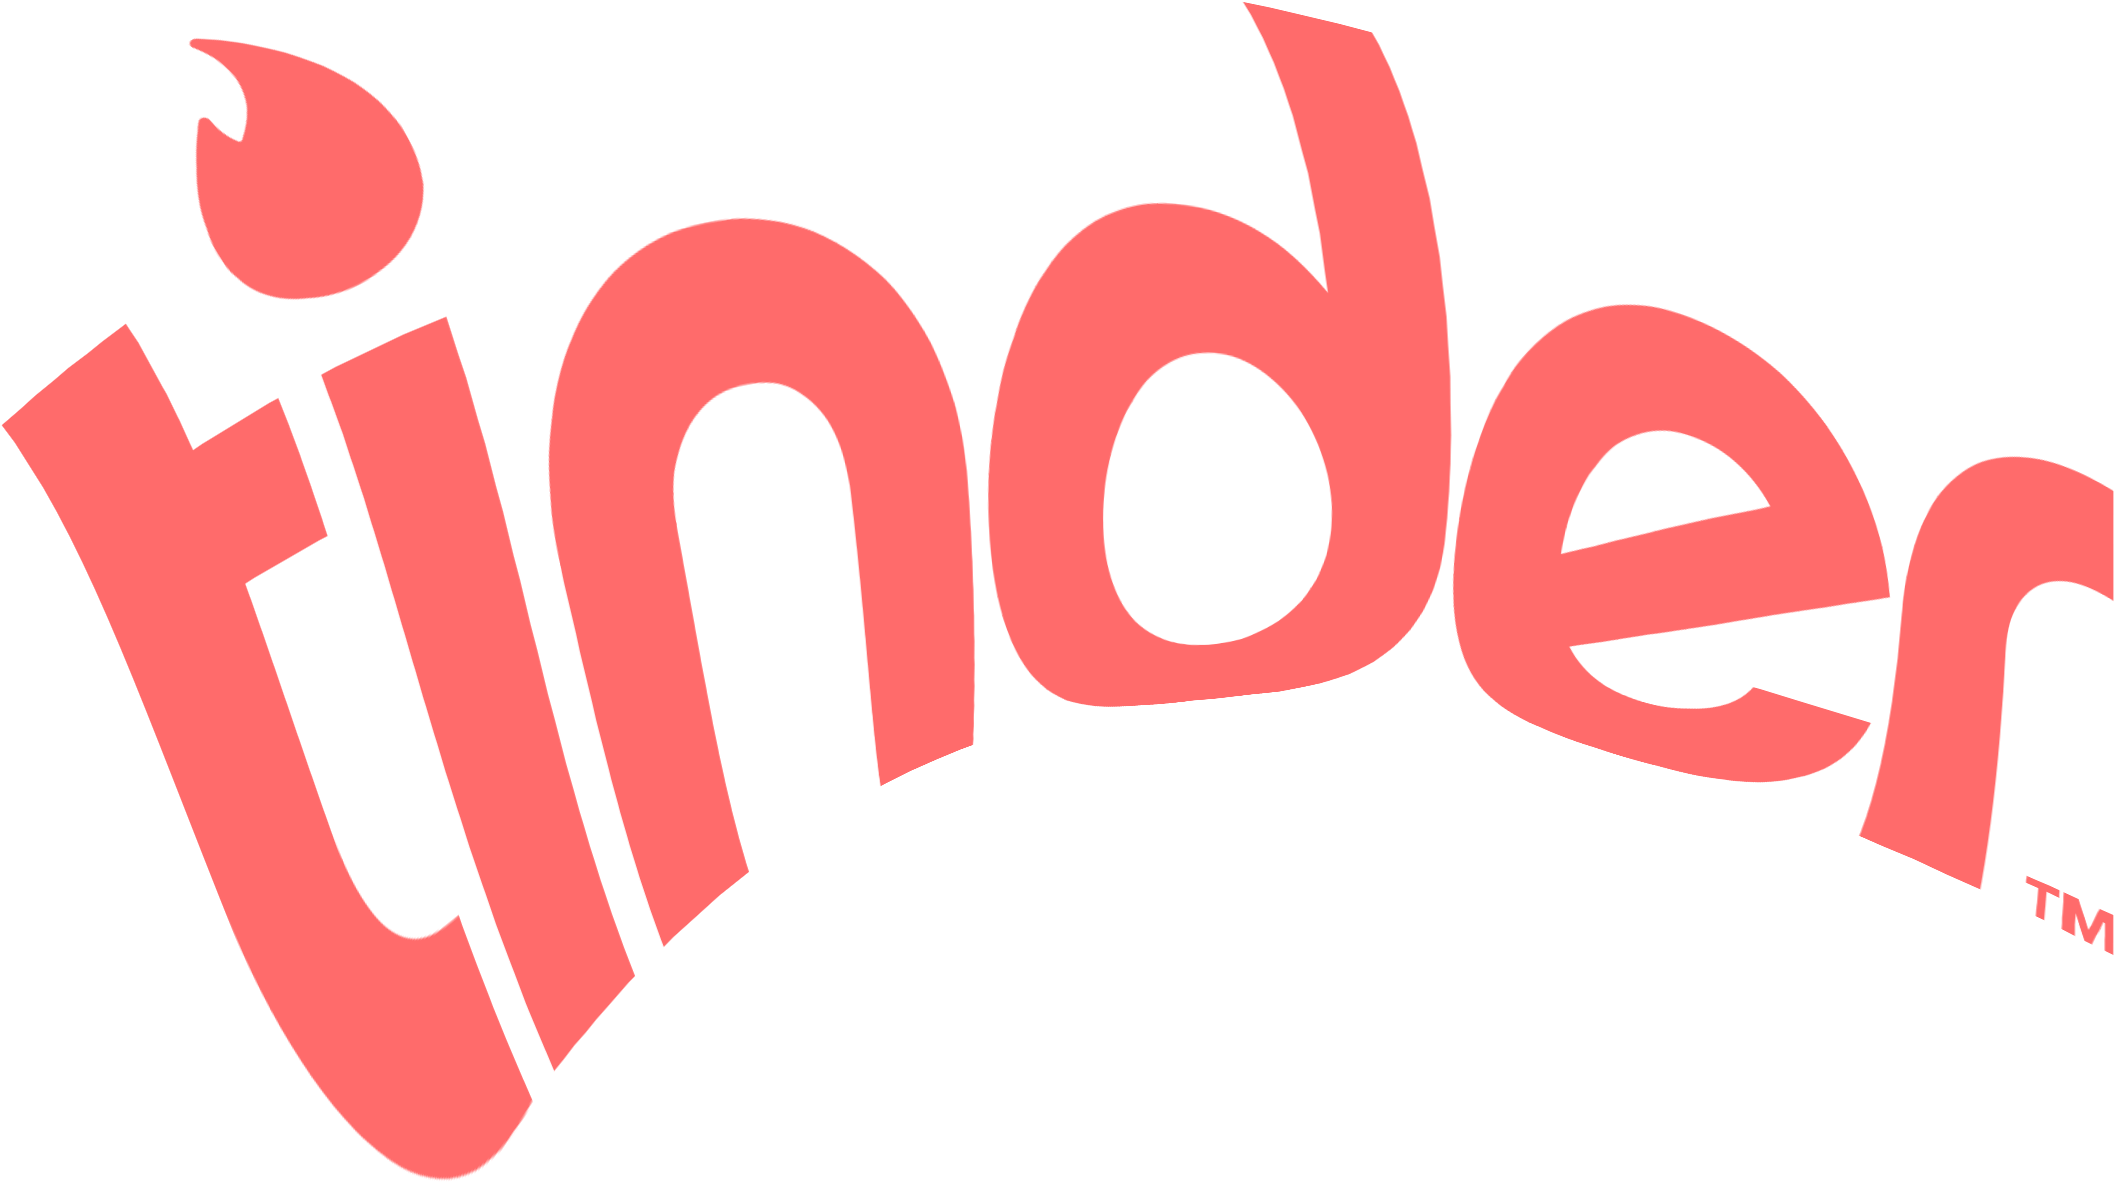 Download Tinder Logo Png Png Image With No Background Pngkey Com